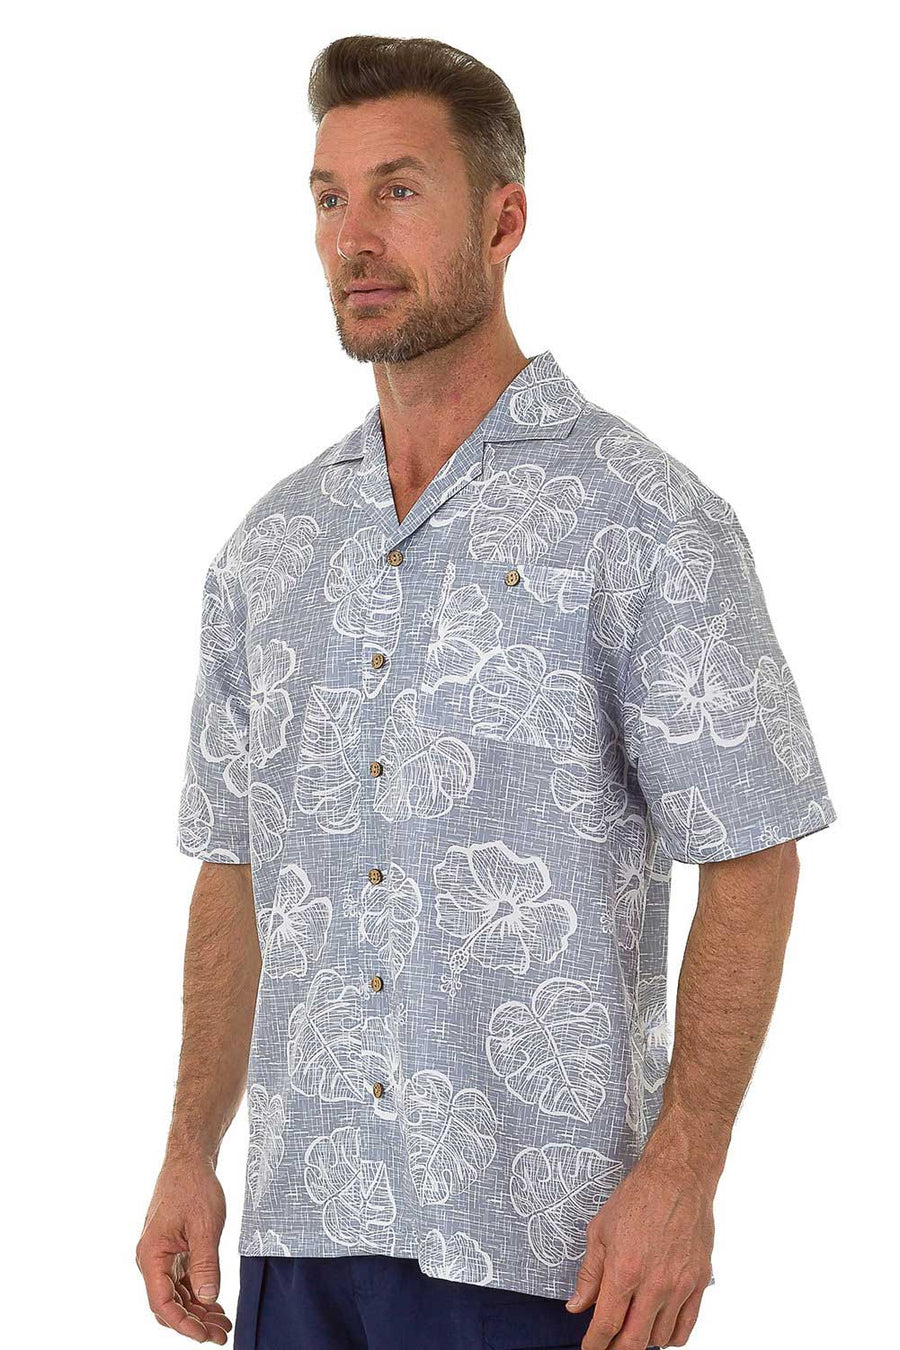 Men's Hawaiian Casual Shirt, Flower Print